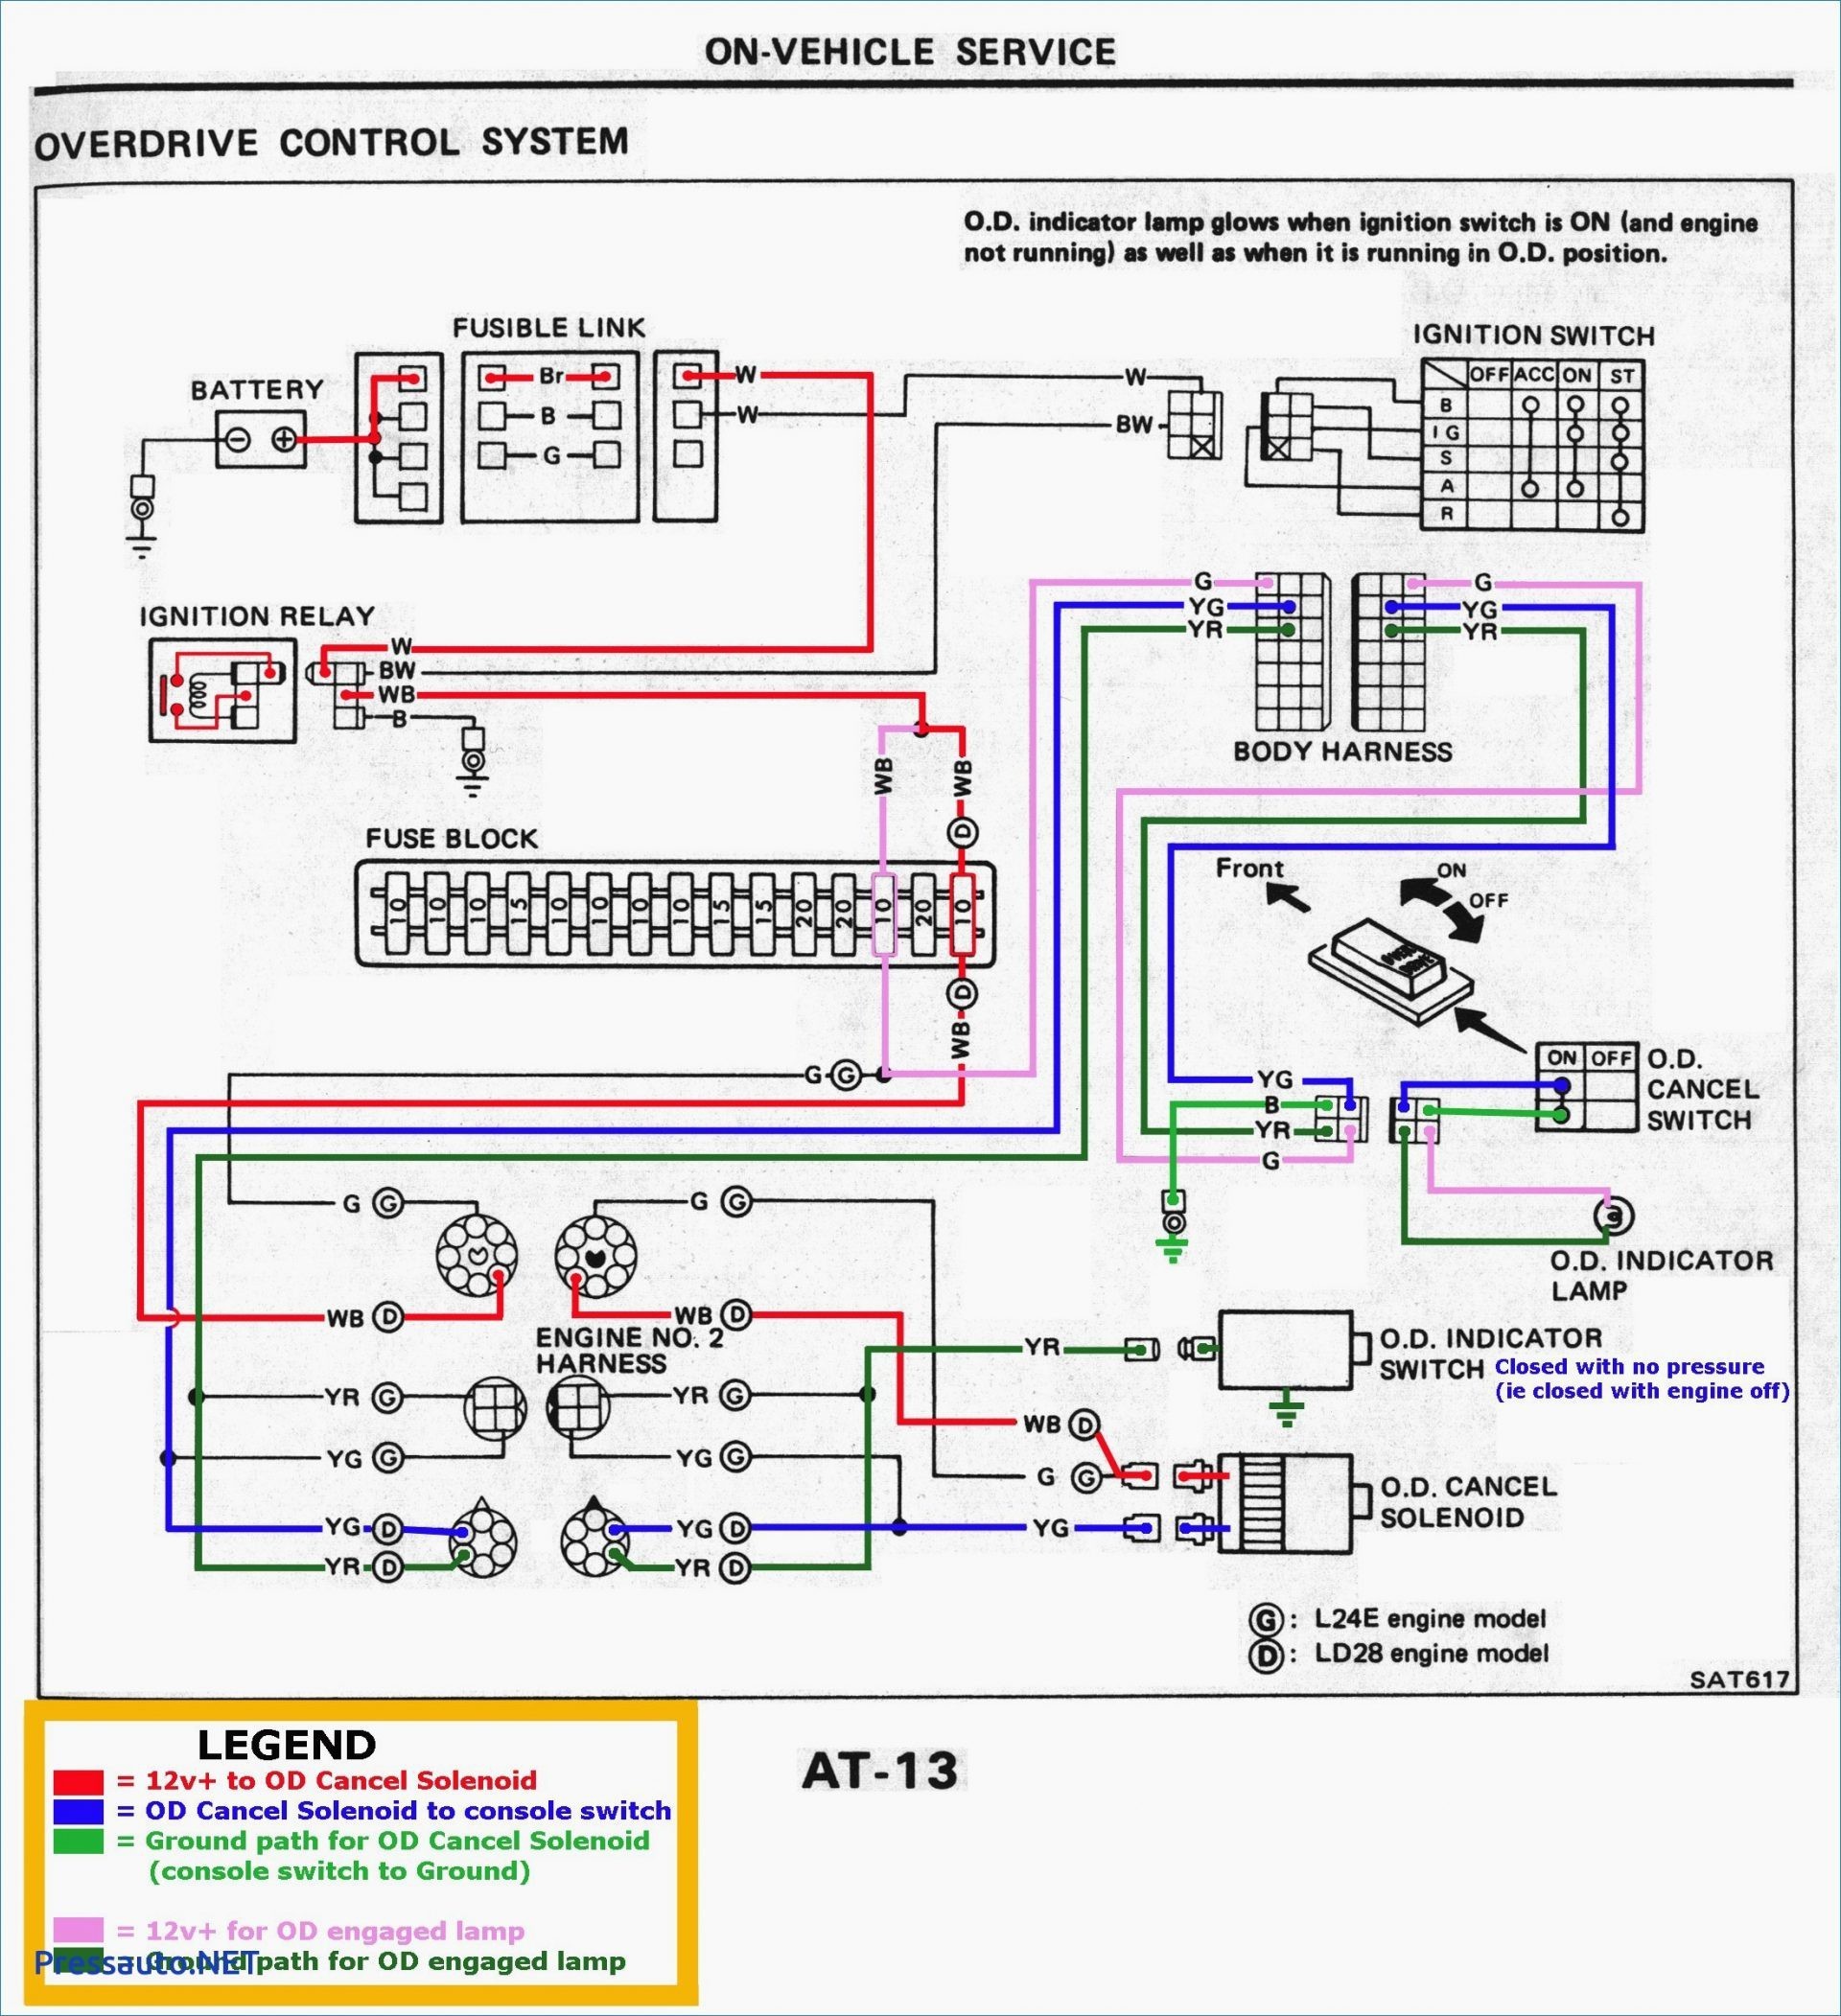 Semi Truck Suspension Diagram 1989 Chevy Truck Wiring Diagram Sample Of Semi Truck Suspension Diagram